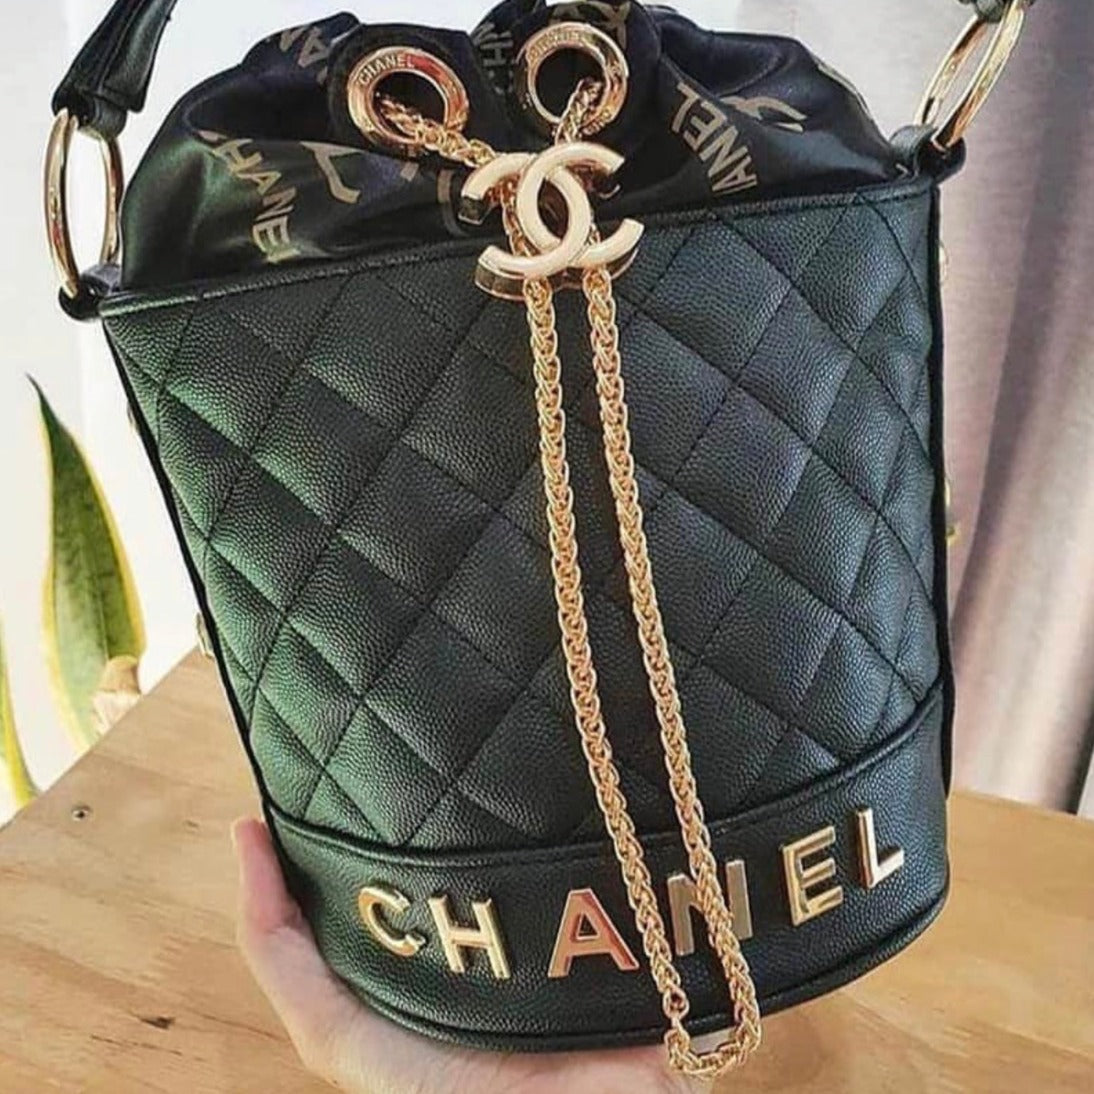 Chanel drawstring bag - Gem